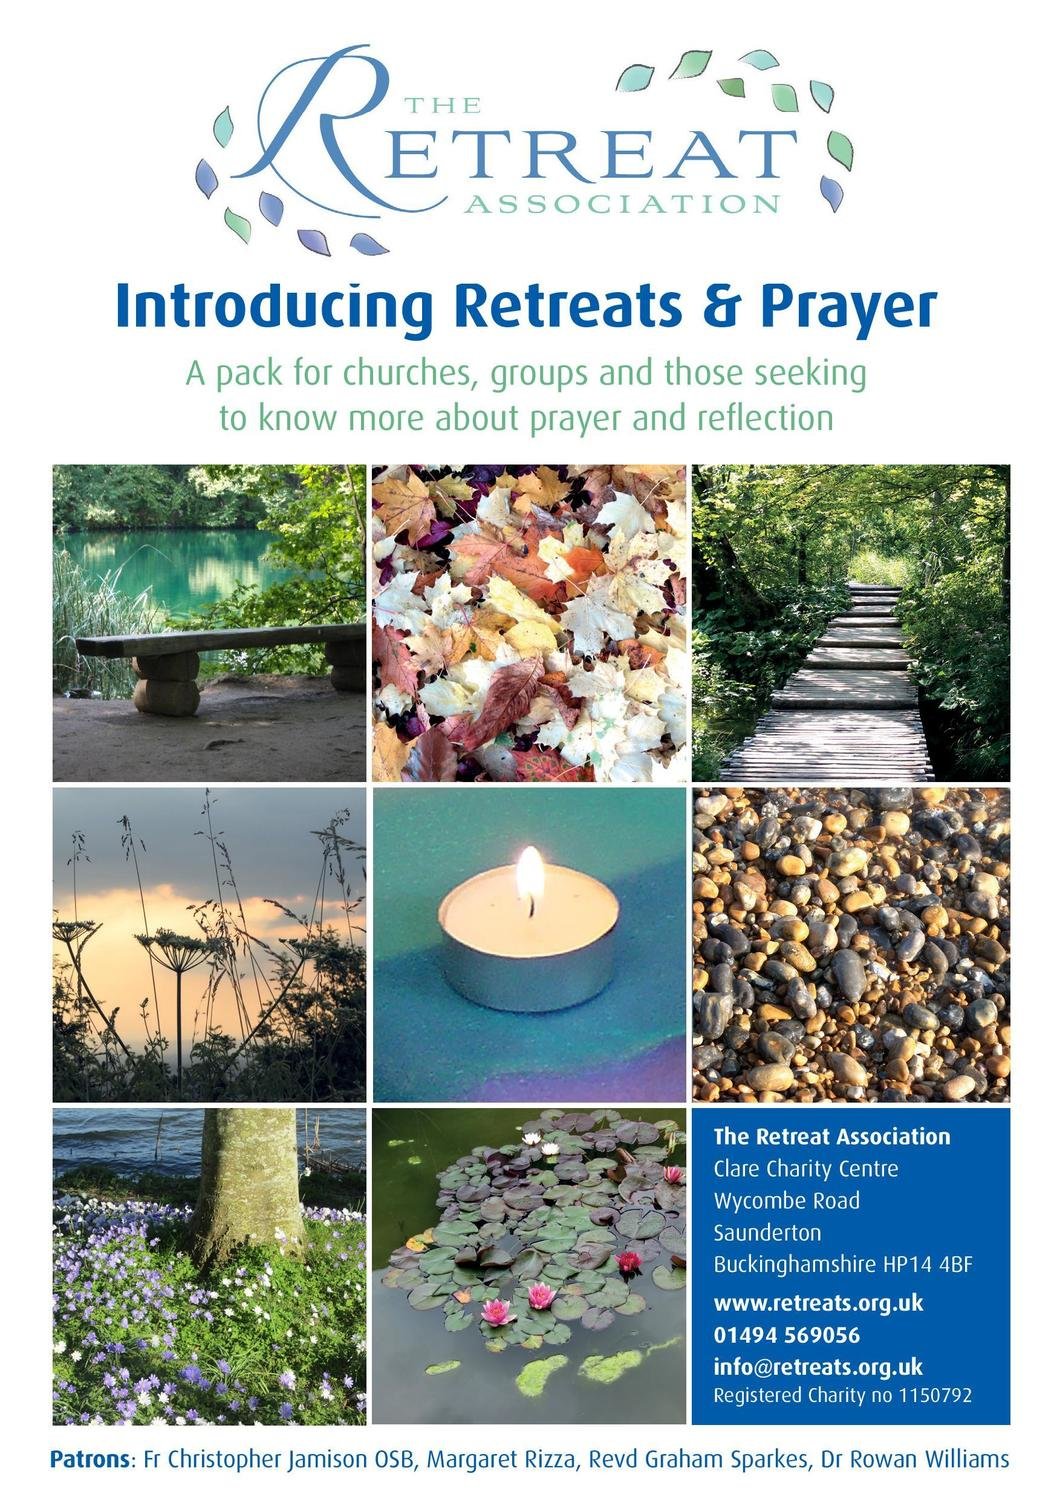 Introducing Retreats & Prayer Pack